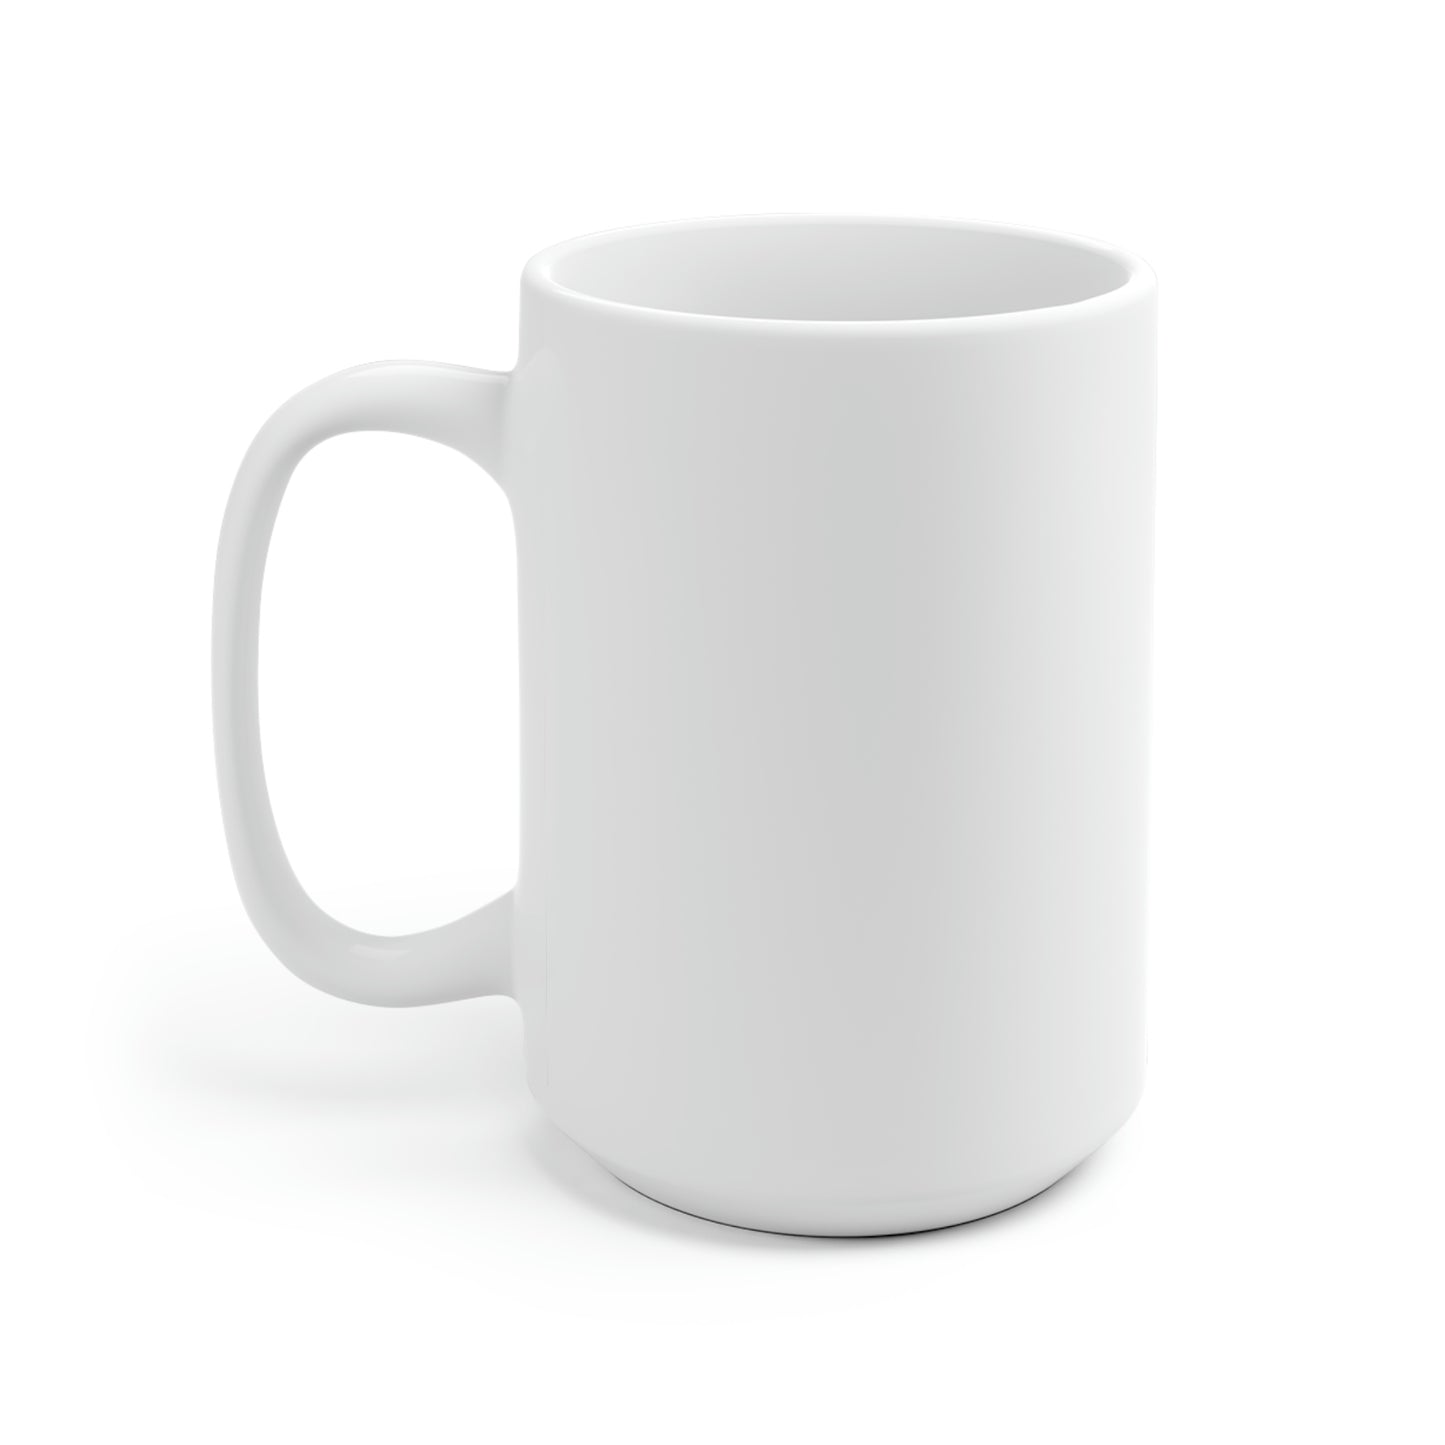 Say NO to Drugs - White Ceramic Mug